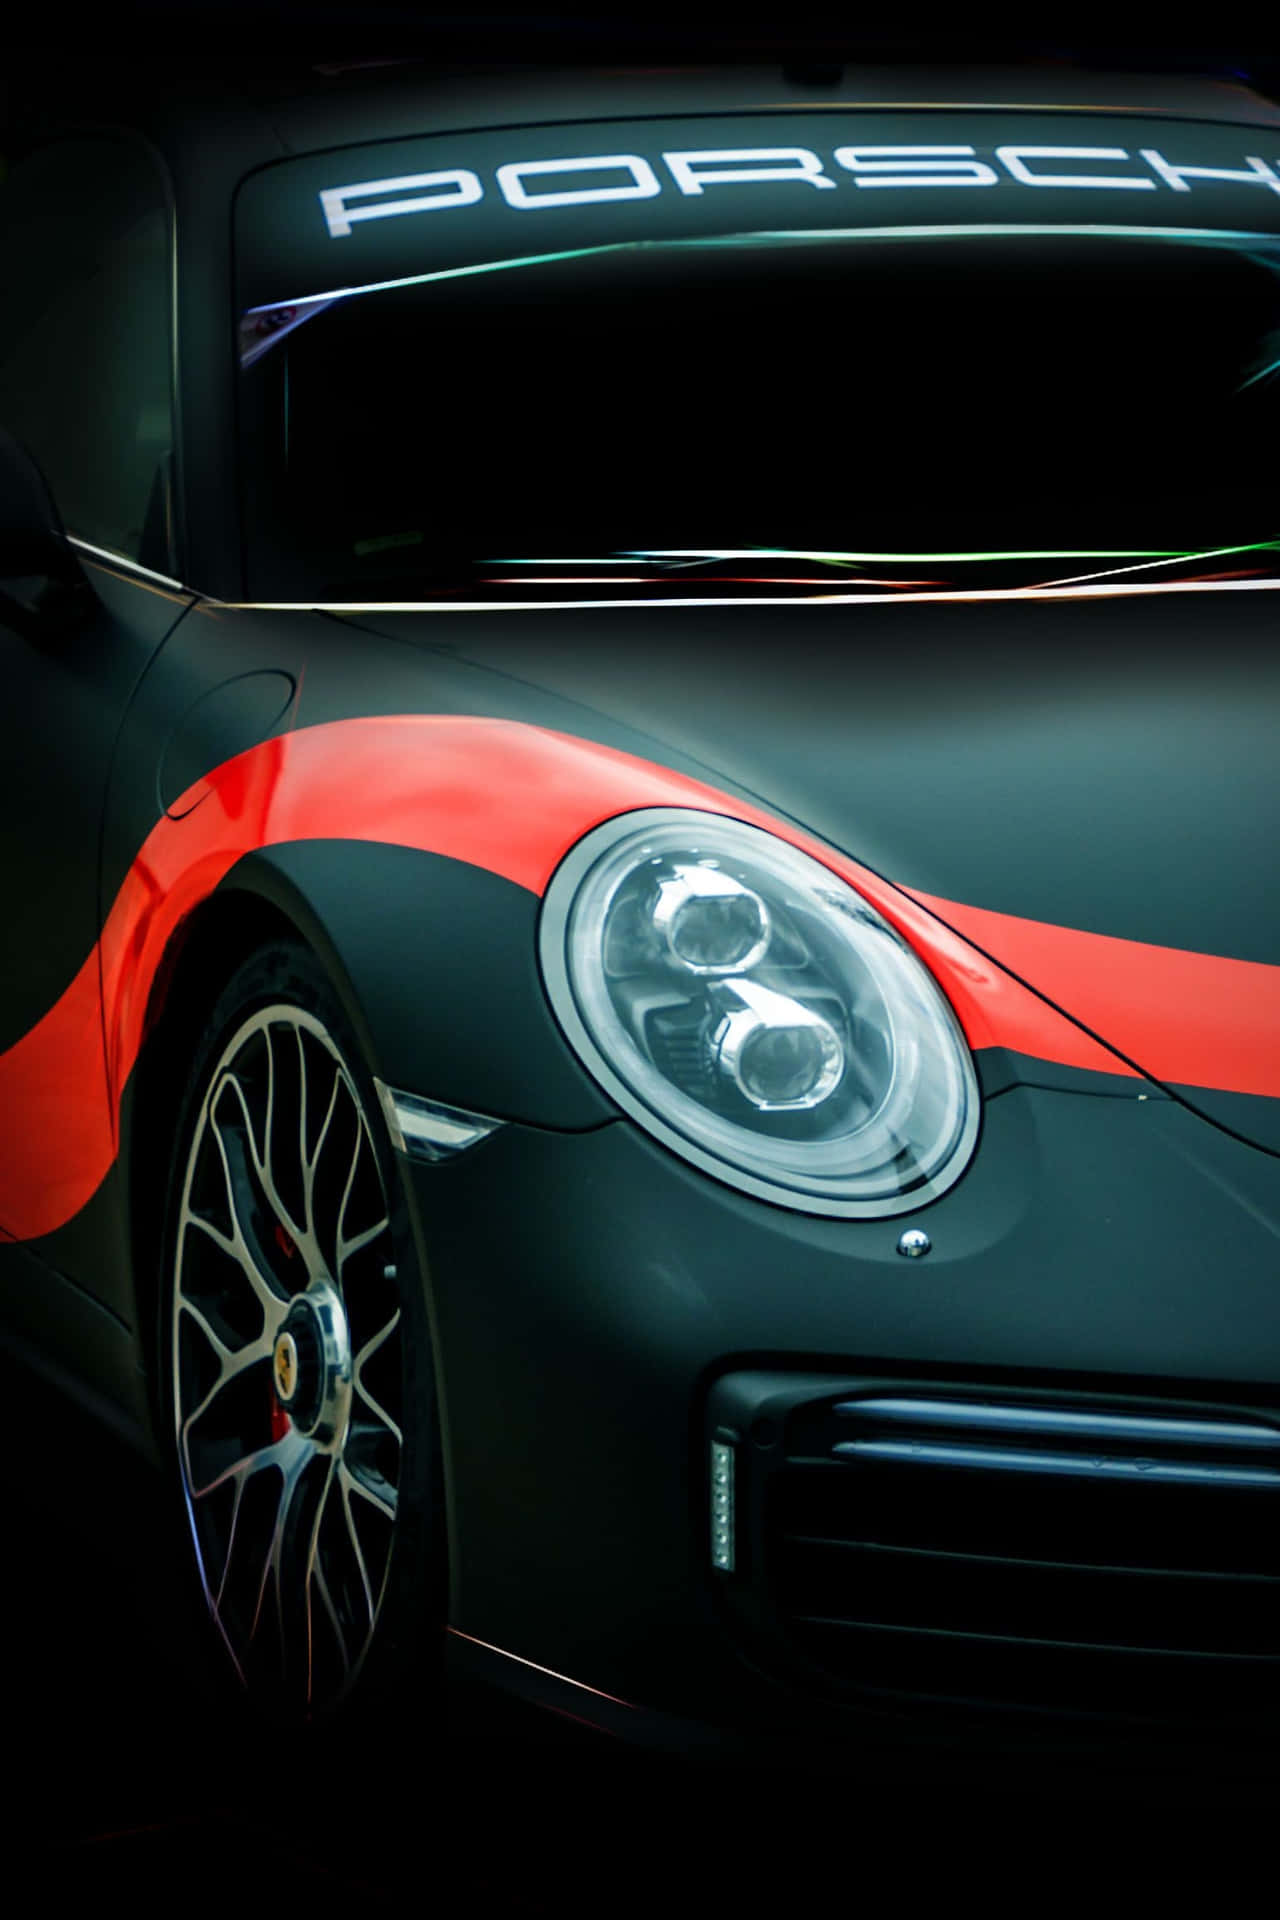 Iphonexs Max Projektbilar 2 Svart Med Röd Porsche 911 Bakgrund